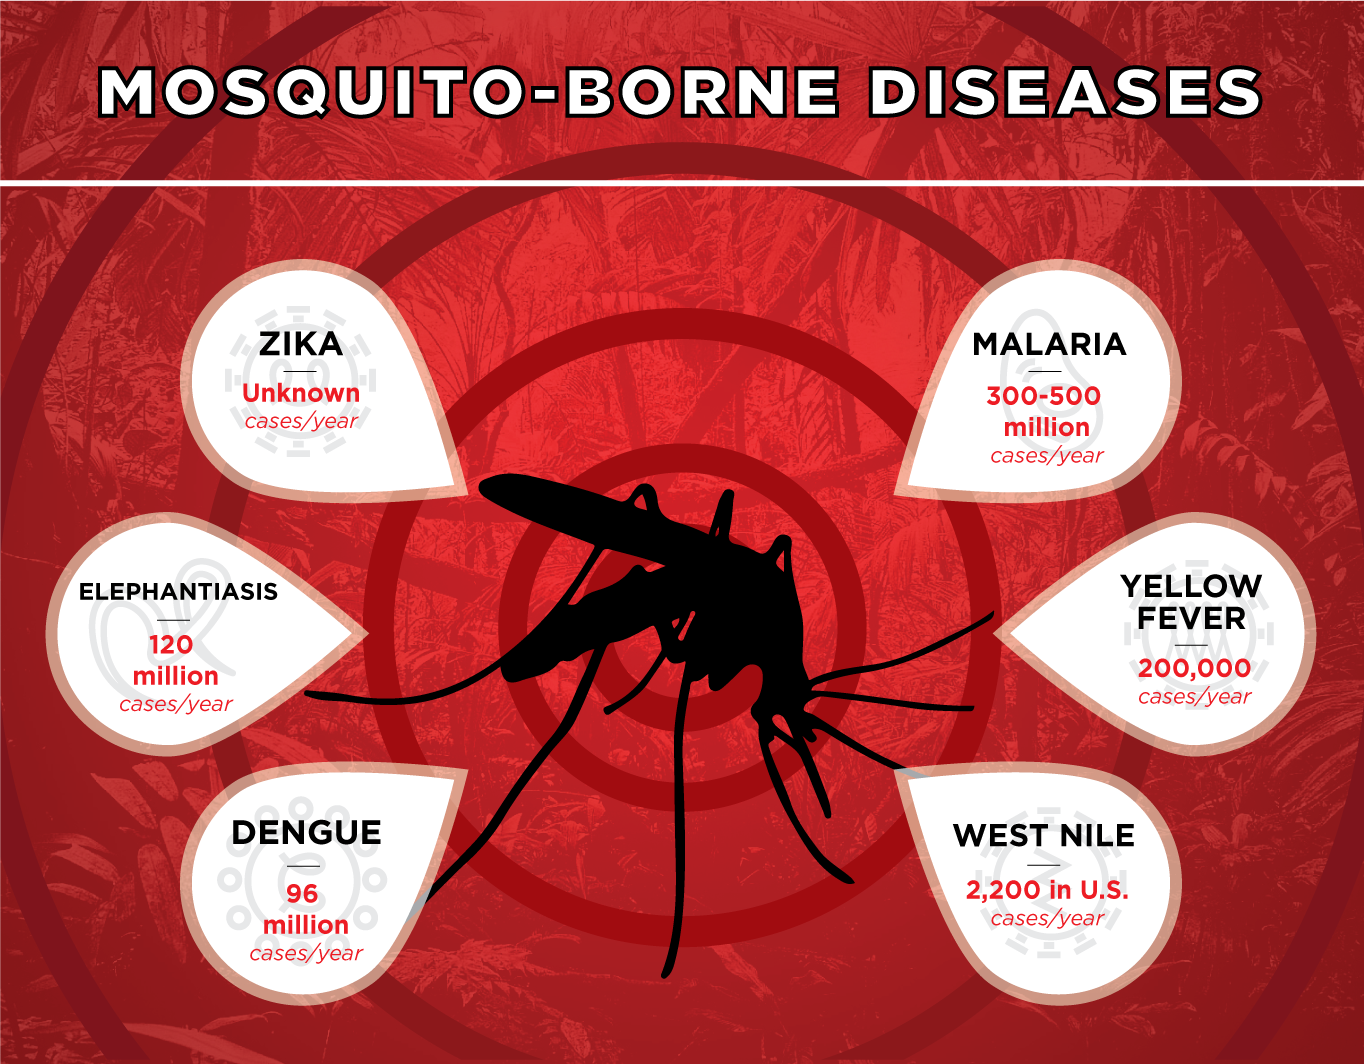 Mosquito-Borne Disease - Zika unknown cases/year, Malaria 300-500 million cases/year, Elephantiasis 120 million cases/year, Yellow Fever 200,000 cases/year, Dengue 96 million cases/year, West Nile 2,200 in U.S. cases/year